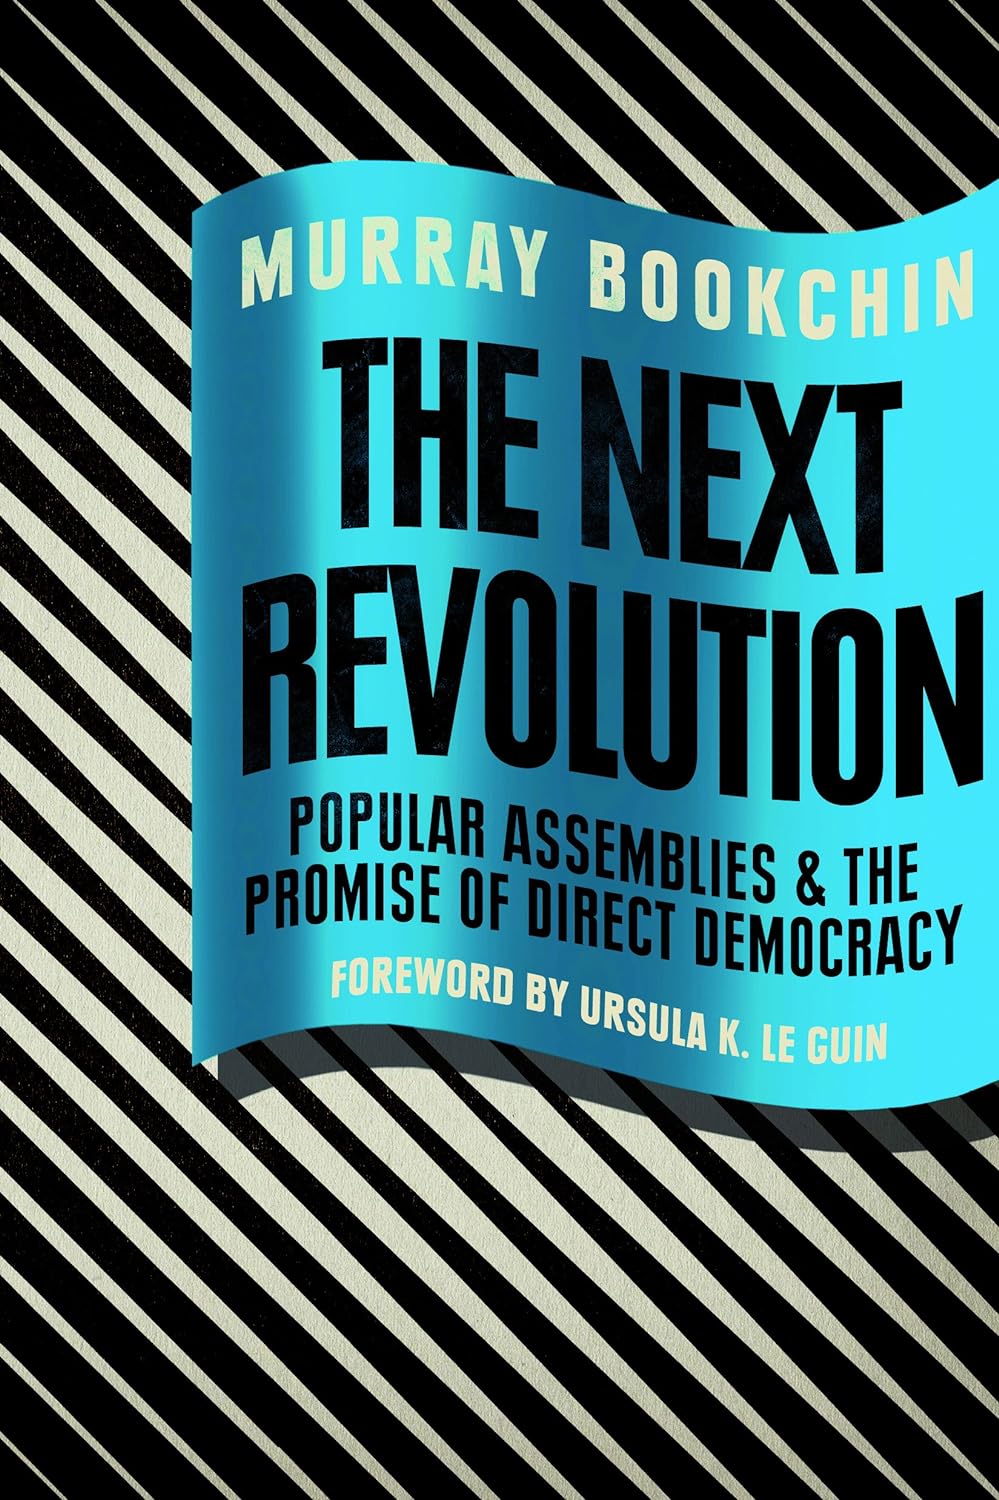 The next revolution (2015, Verso)